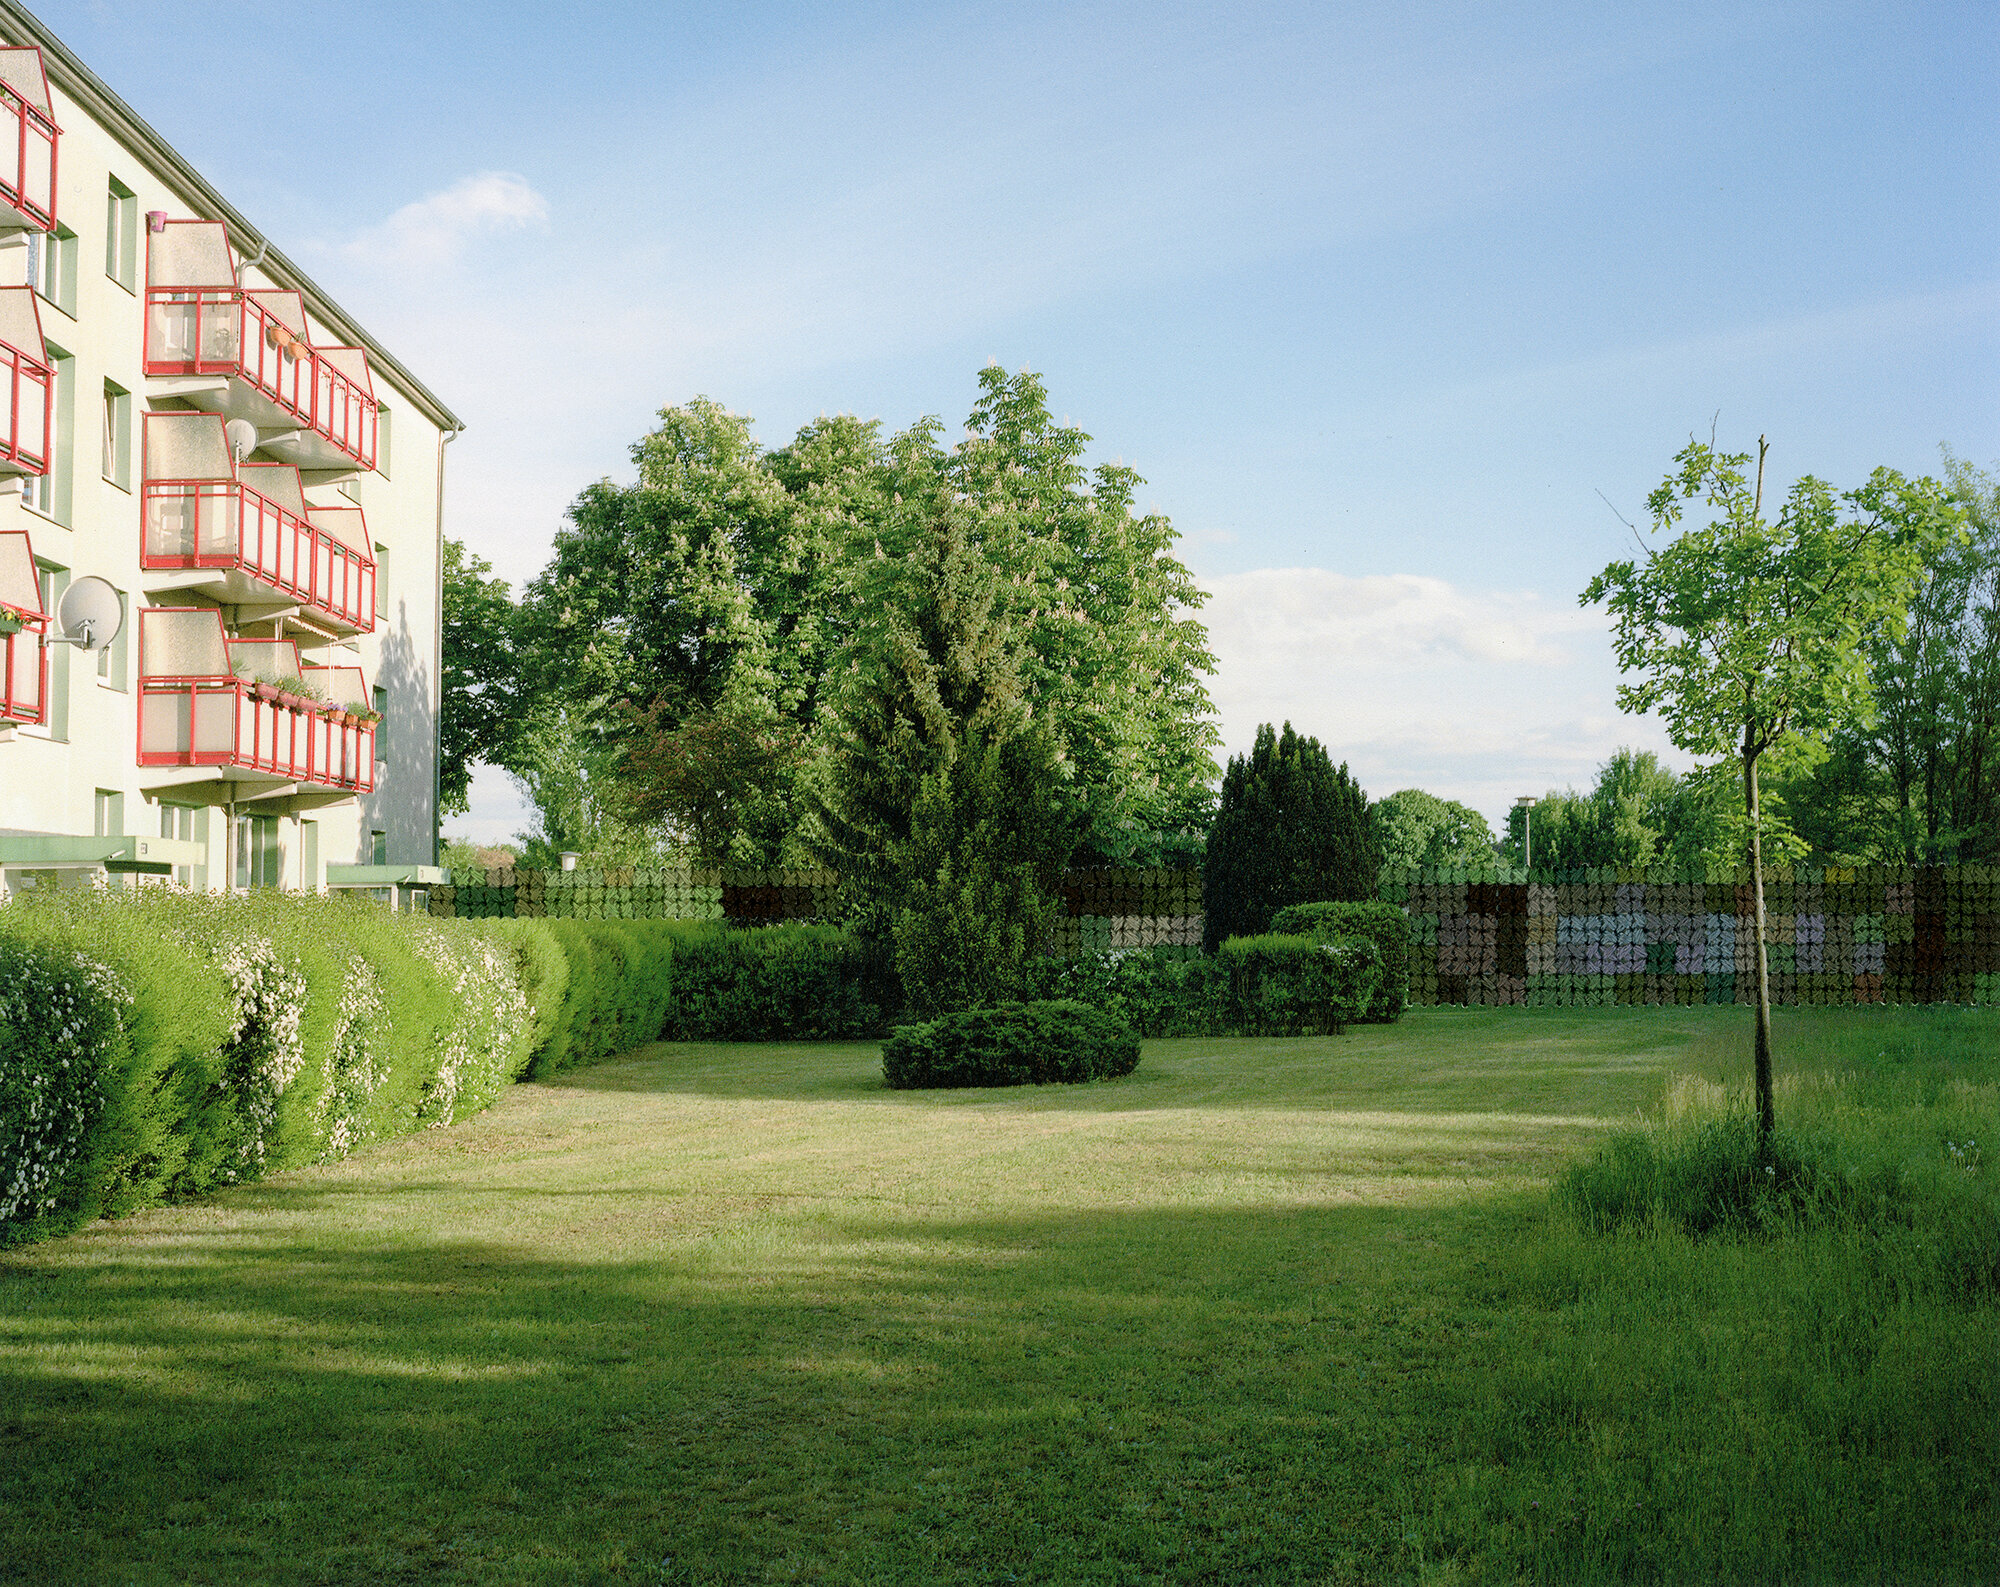 Housing Project, Planterwald